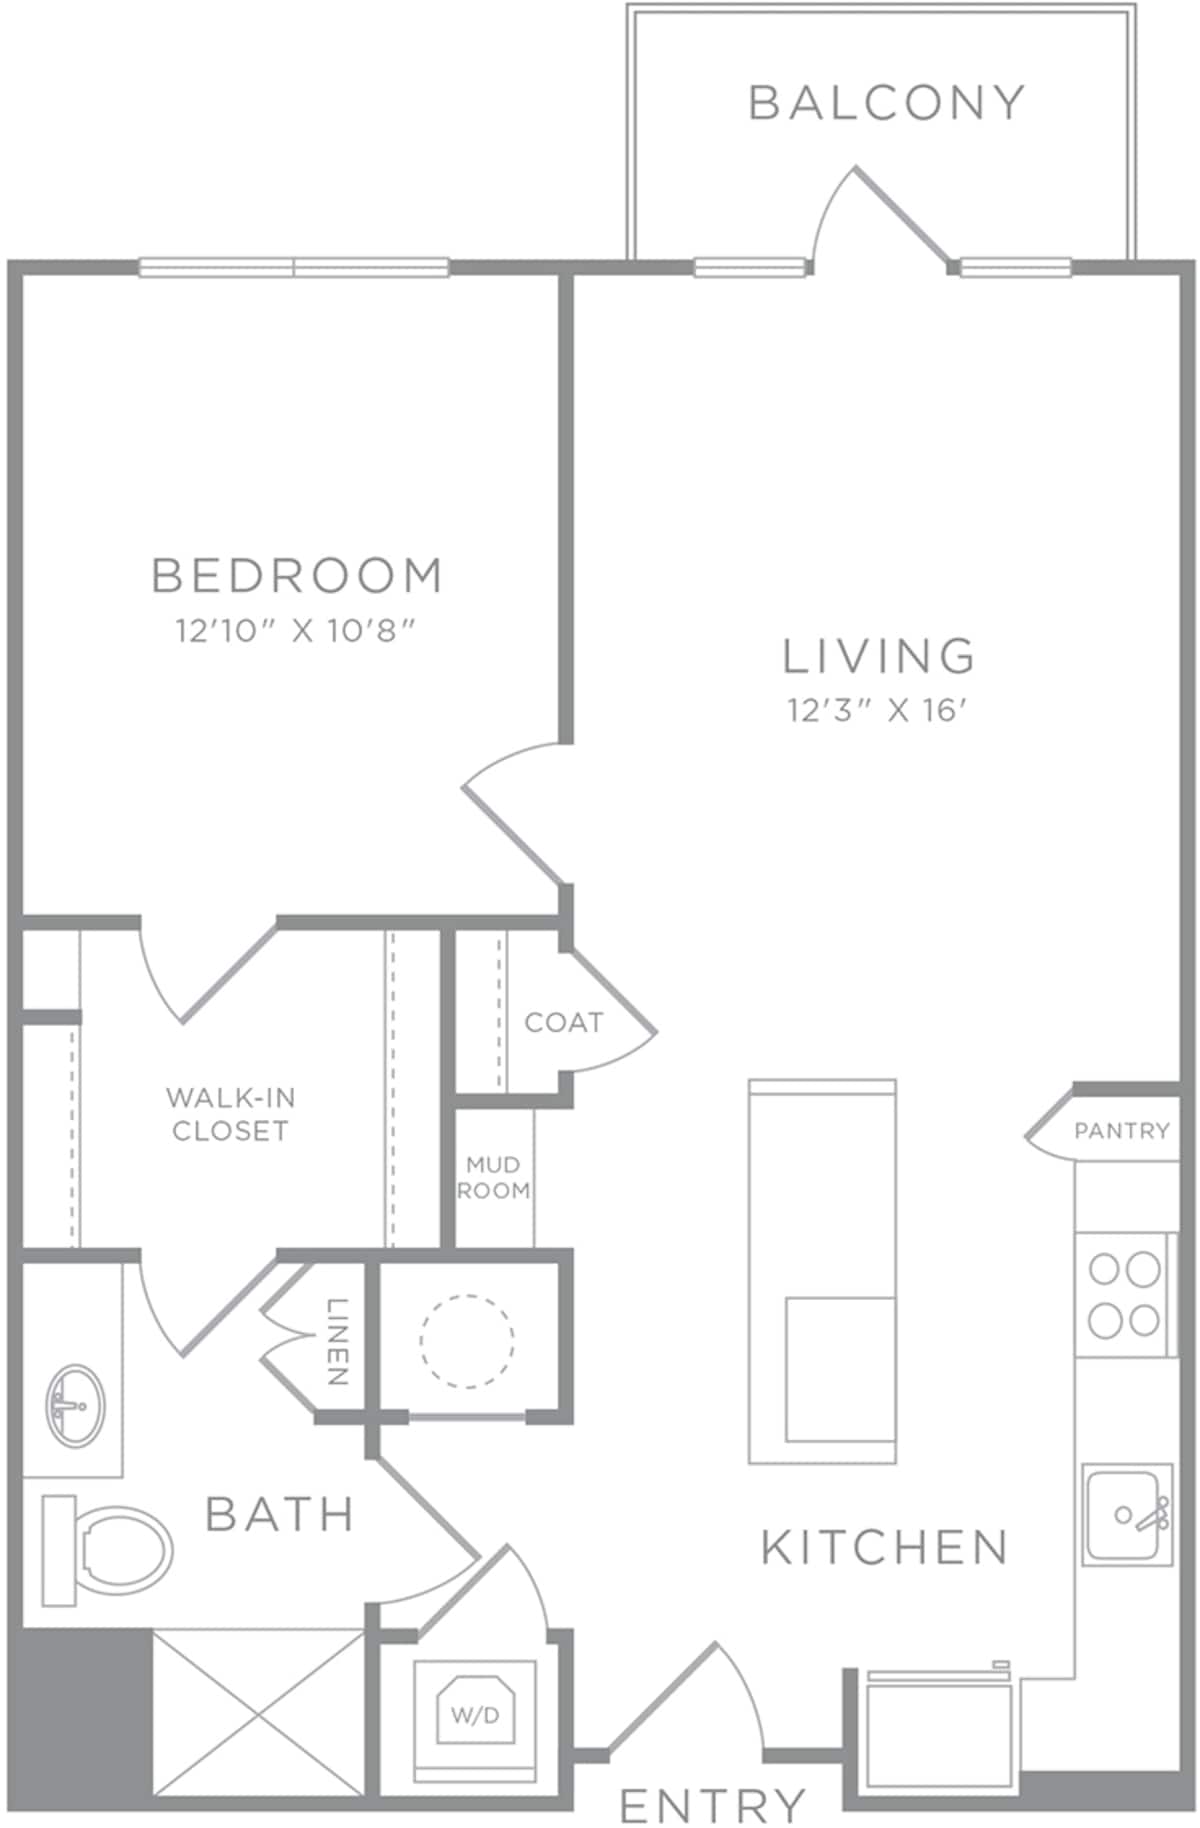 Floorplan diagram for A6, showing 1 bedroom